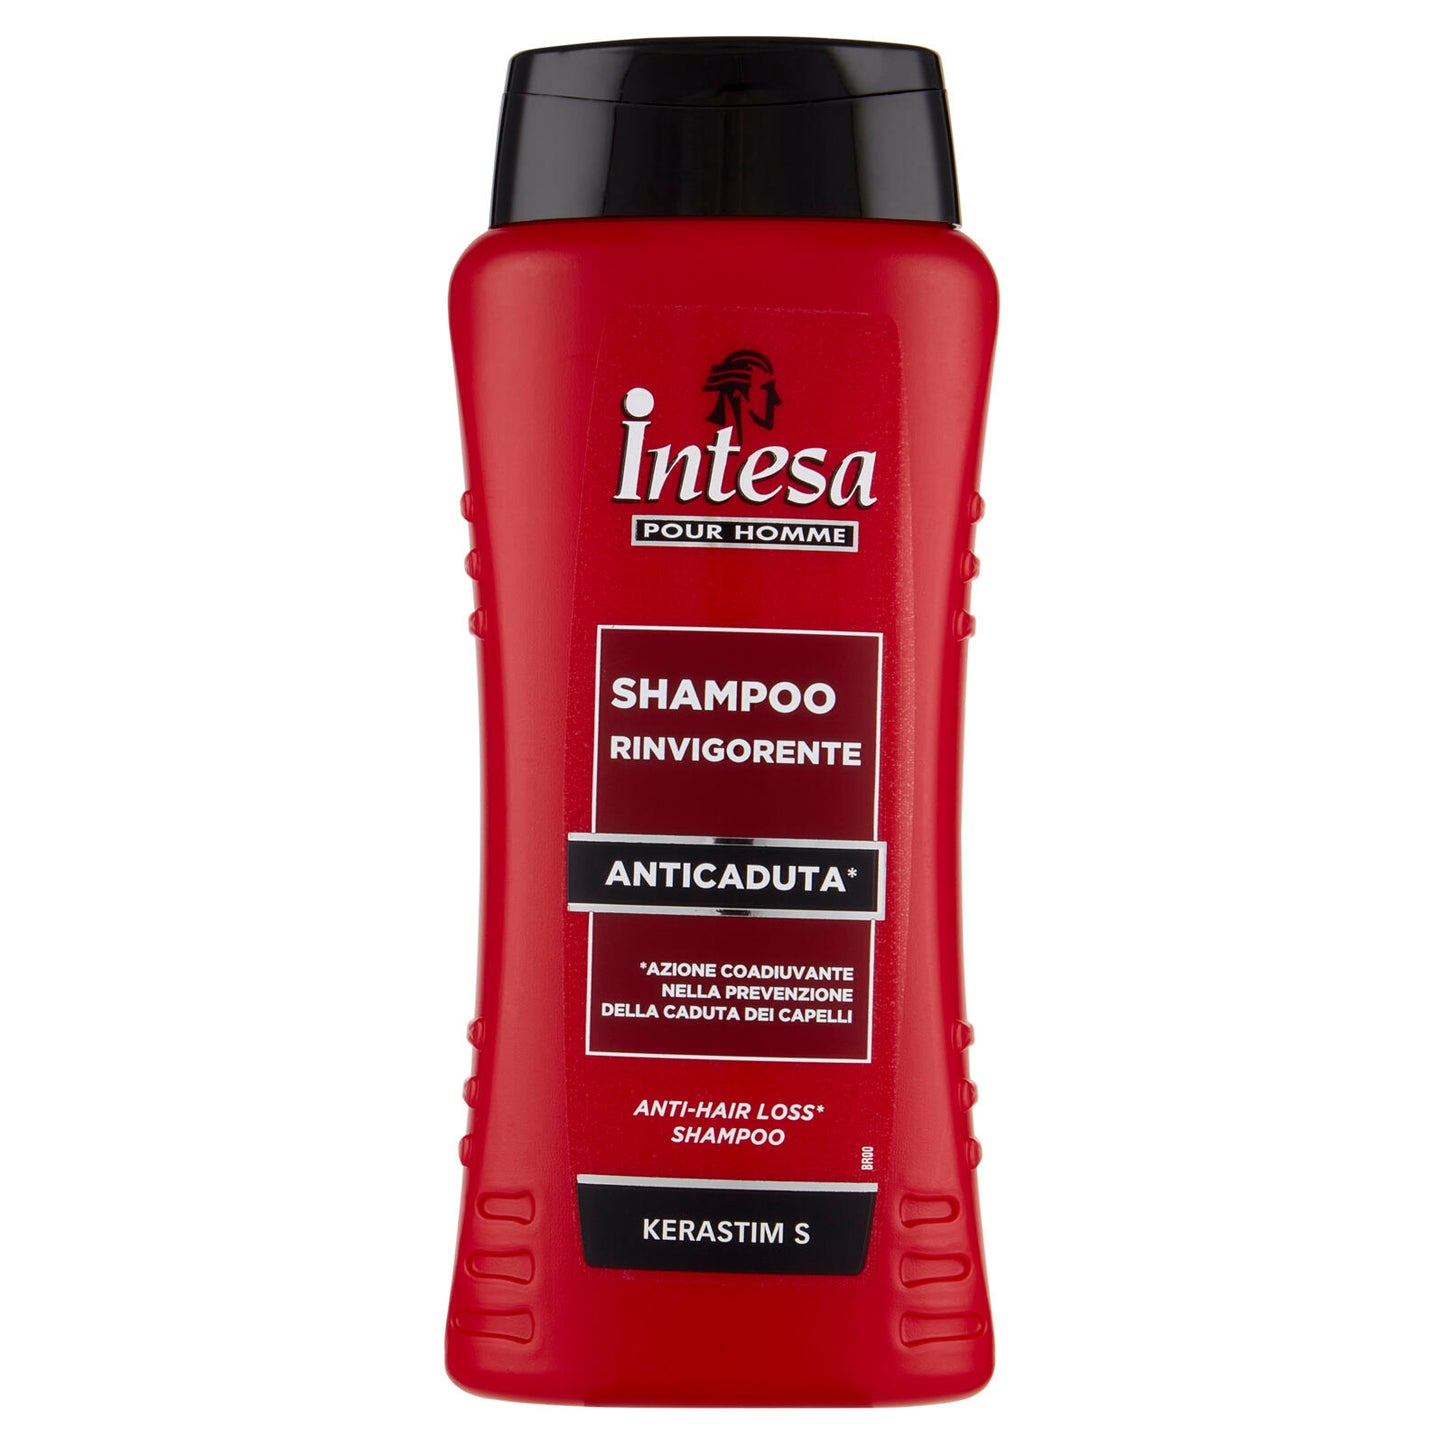 Intesa Pour Homme Shampoo Rinvigorente Anticaduta* Kerastim S 300 mL